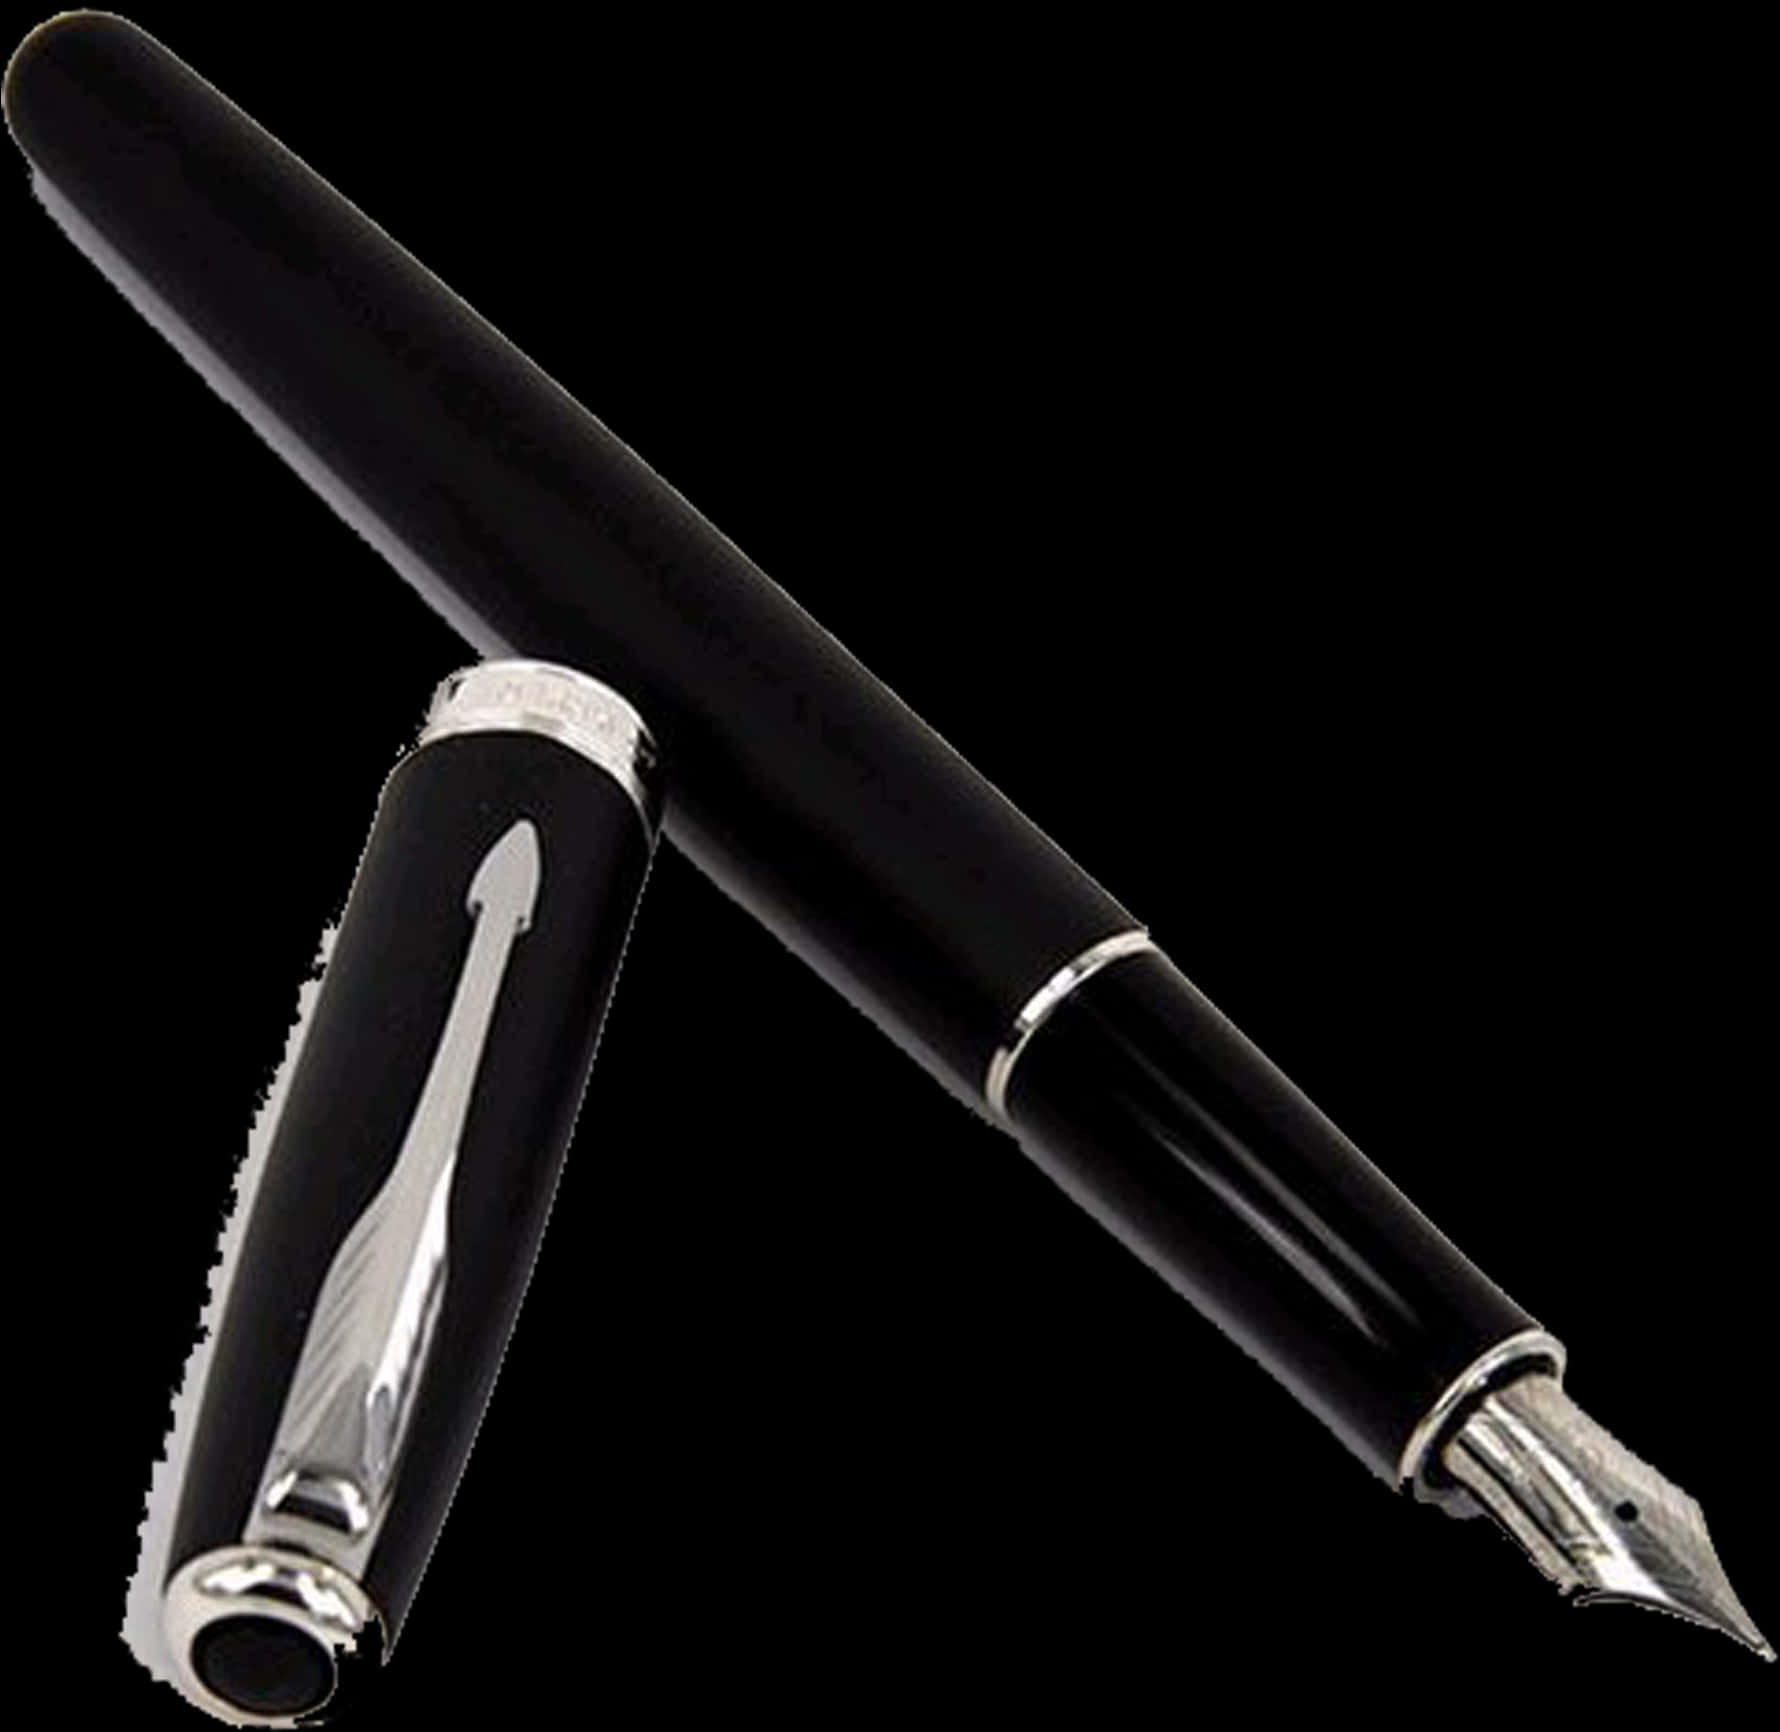 A Black And Silver Fountain Pen